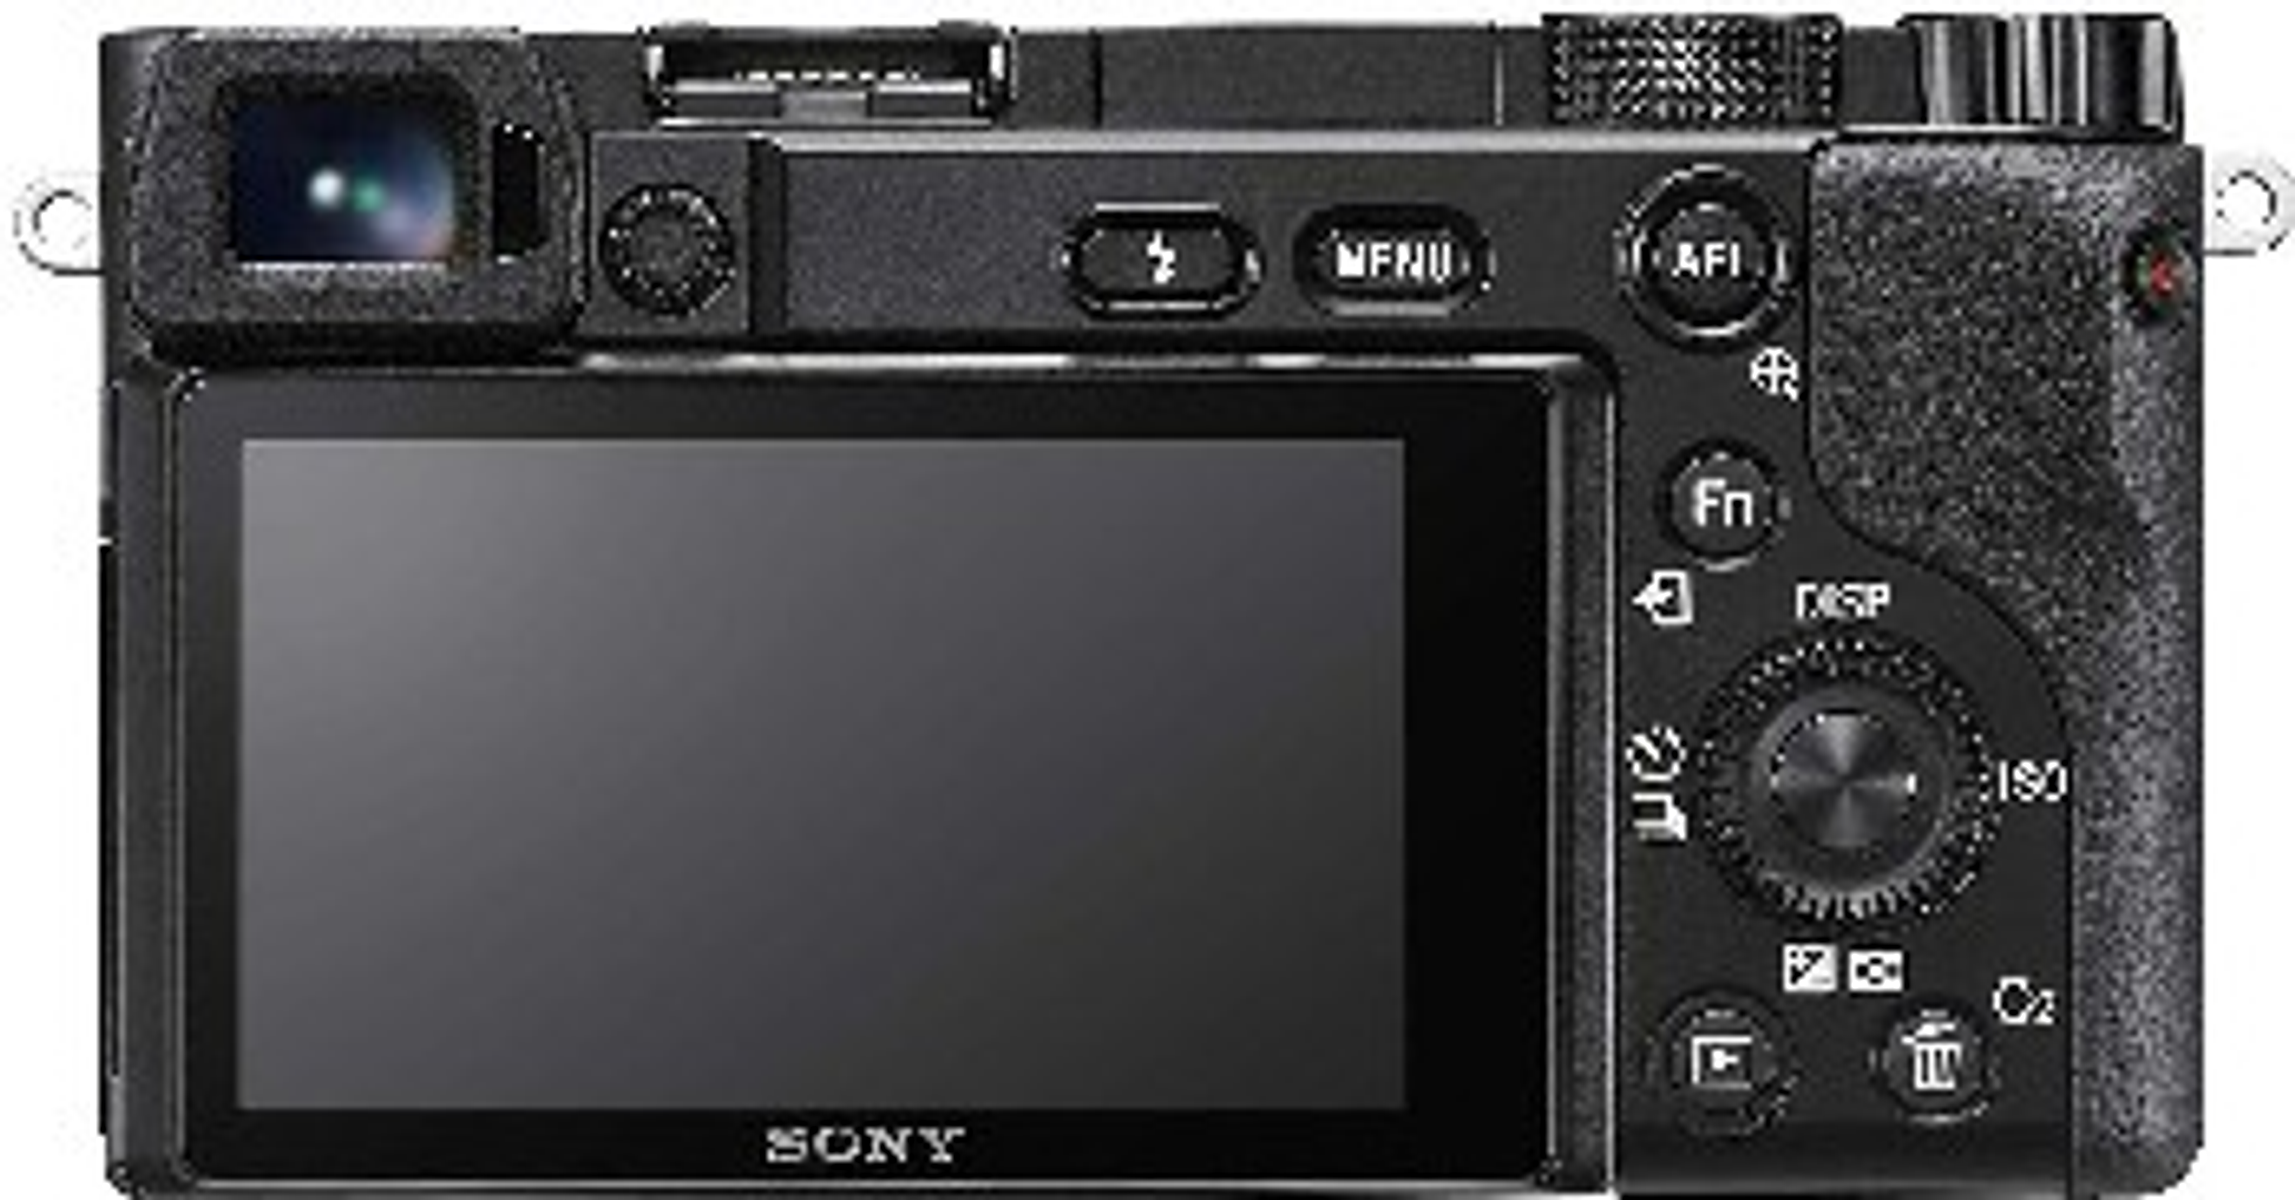 SONY ALPHA 6100 cm SCHWARZ , 7,5 B Touchscreen, Systemkamera Display BODY WLAN